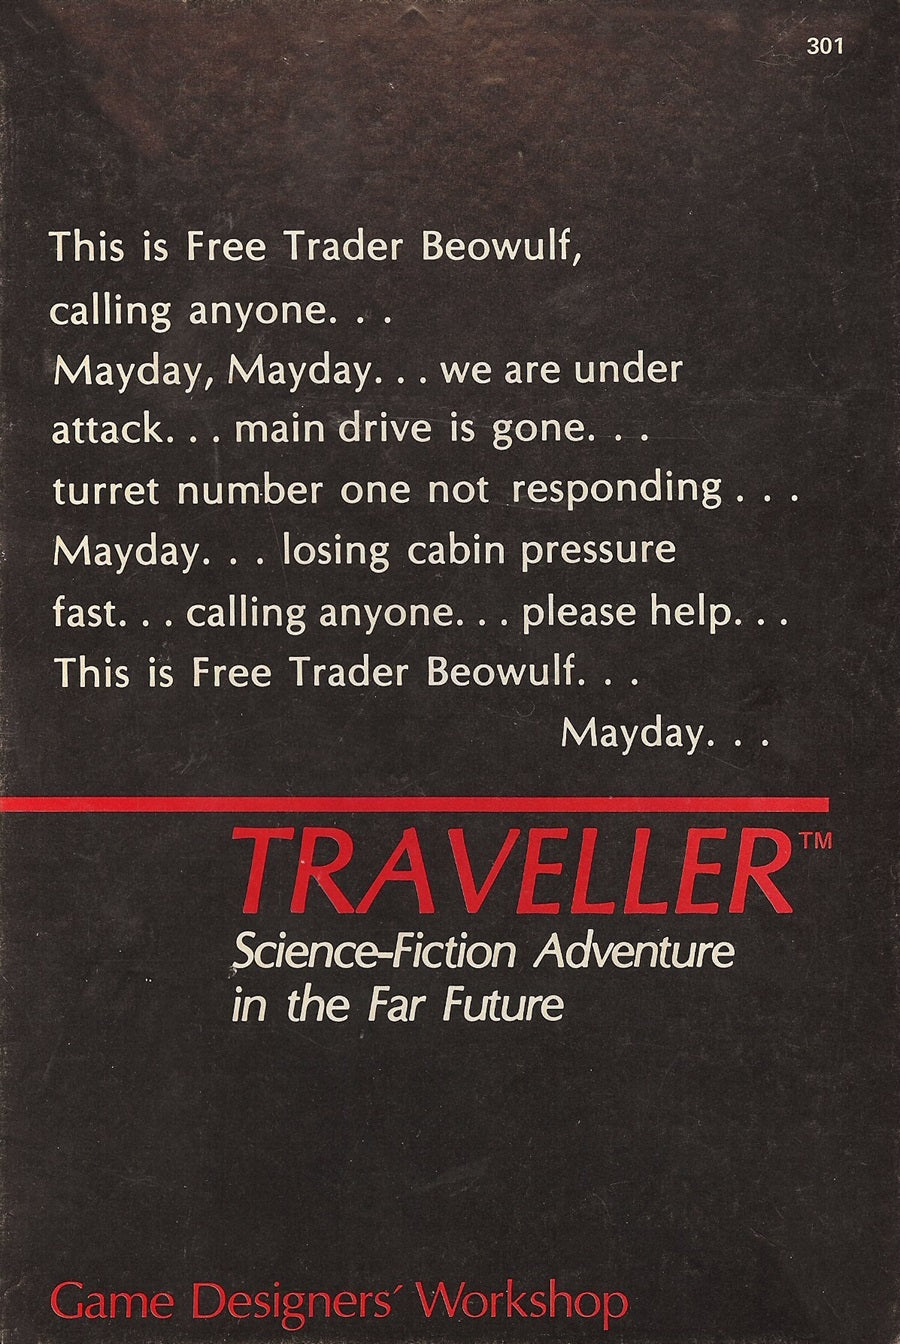 Books 1-3: Classic Traveller ebooks